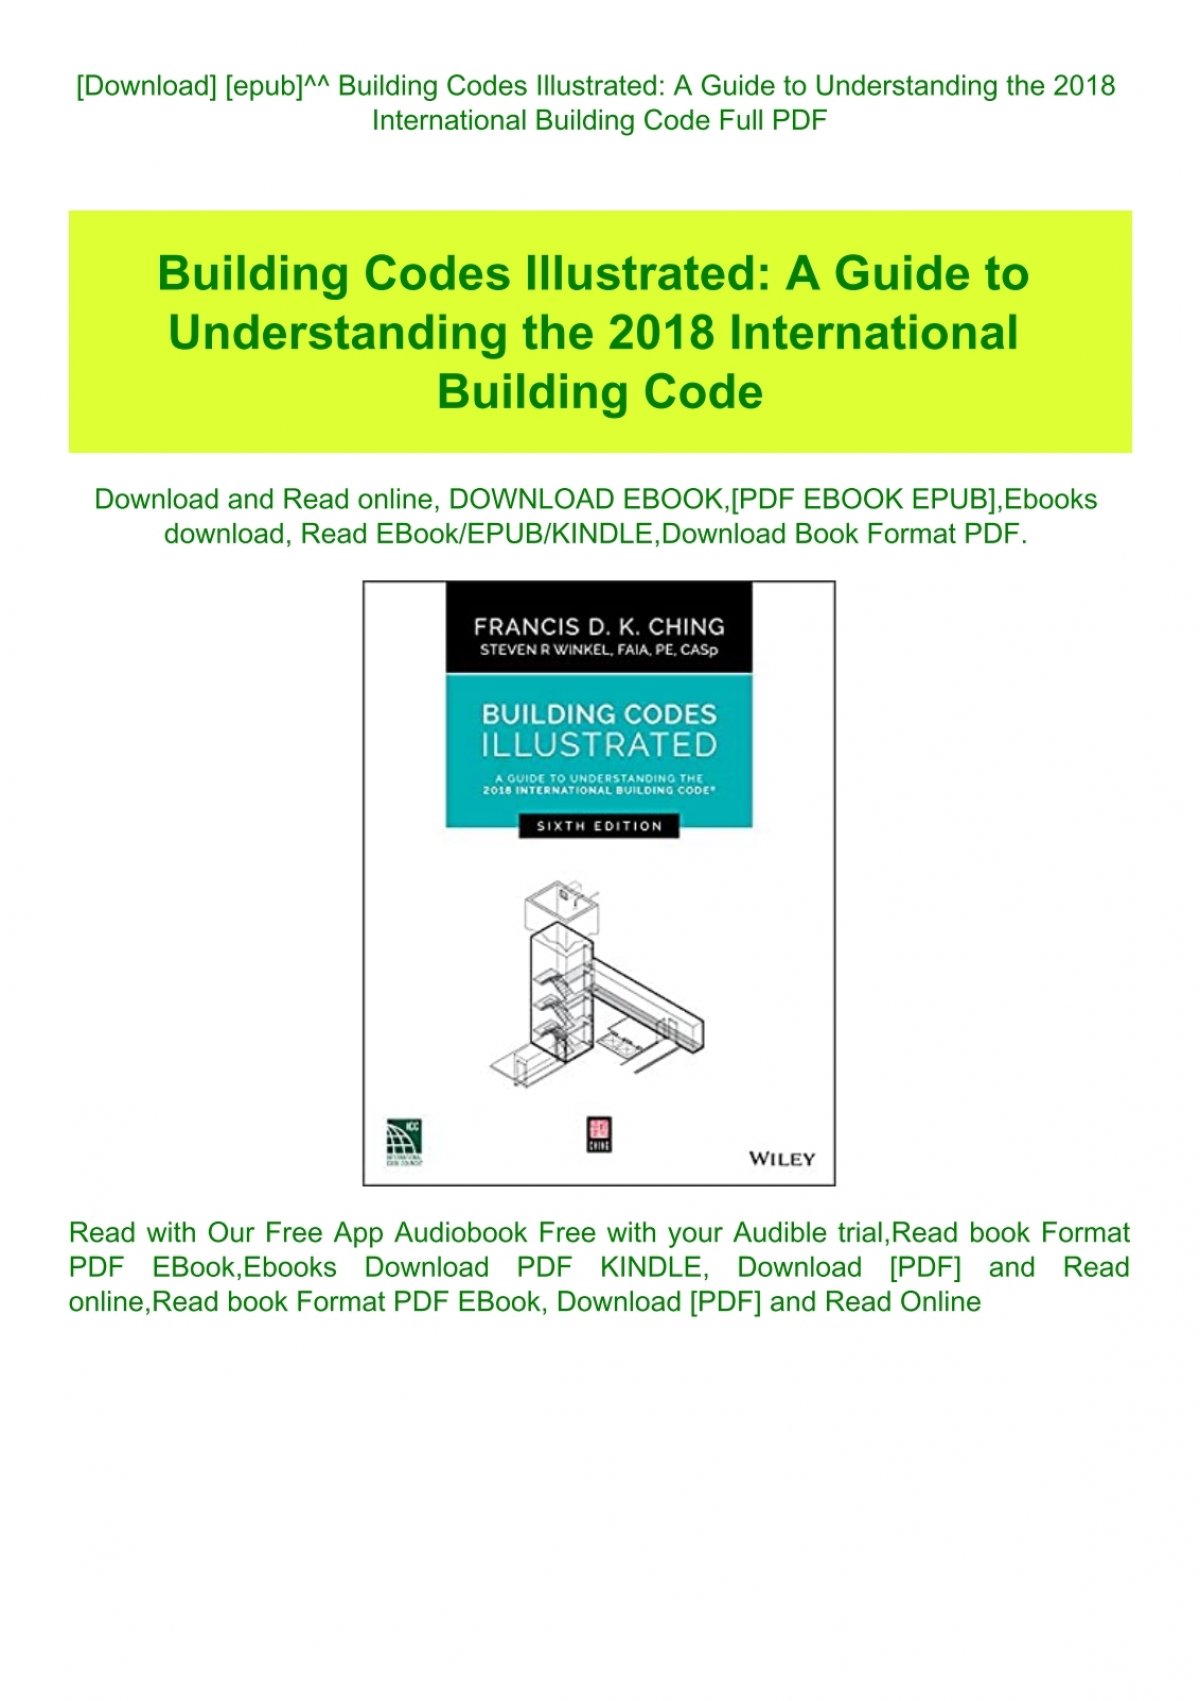 international building code illustrated handbook pdf free download